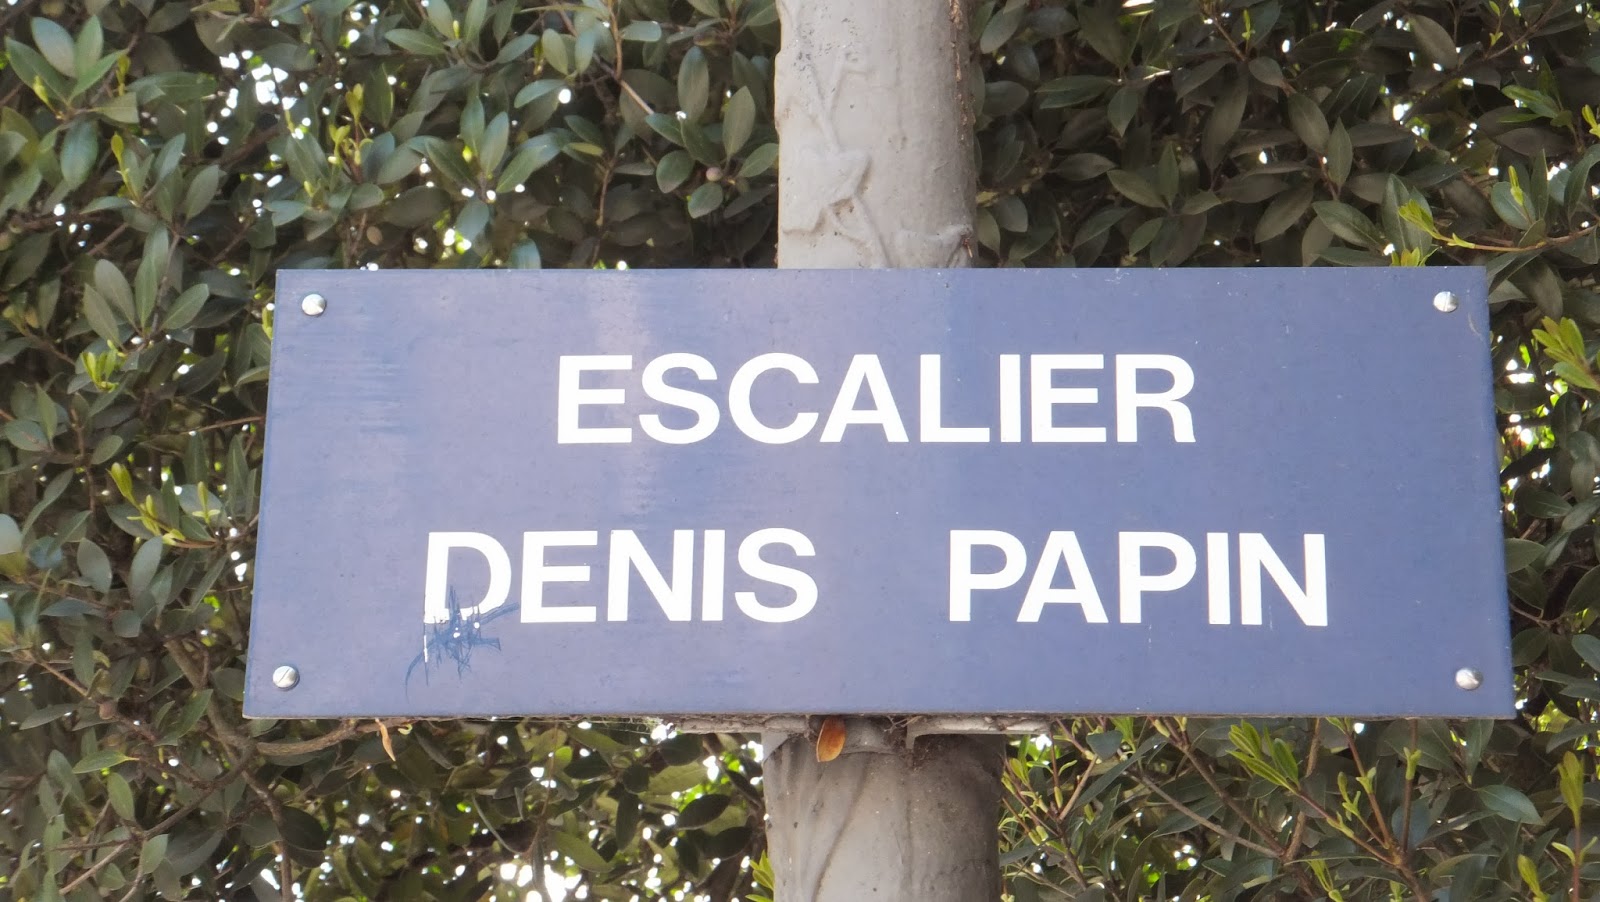 Escalera Denis Papin, Blois, Francia, Elisa N, Blog de Viajes, Lifestyle, Travel